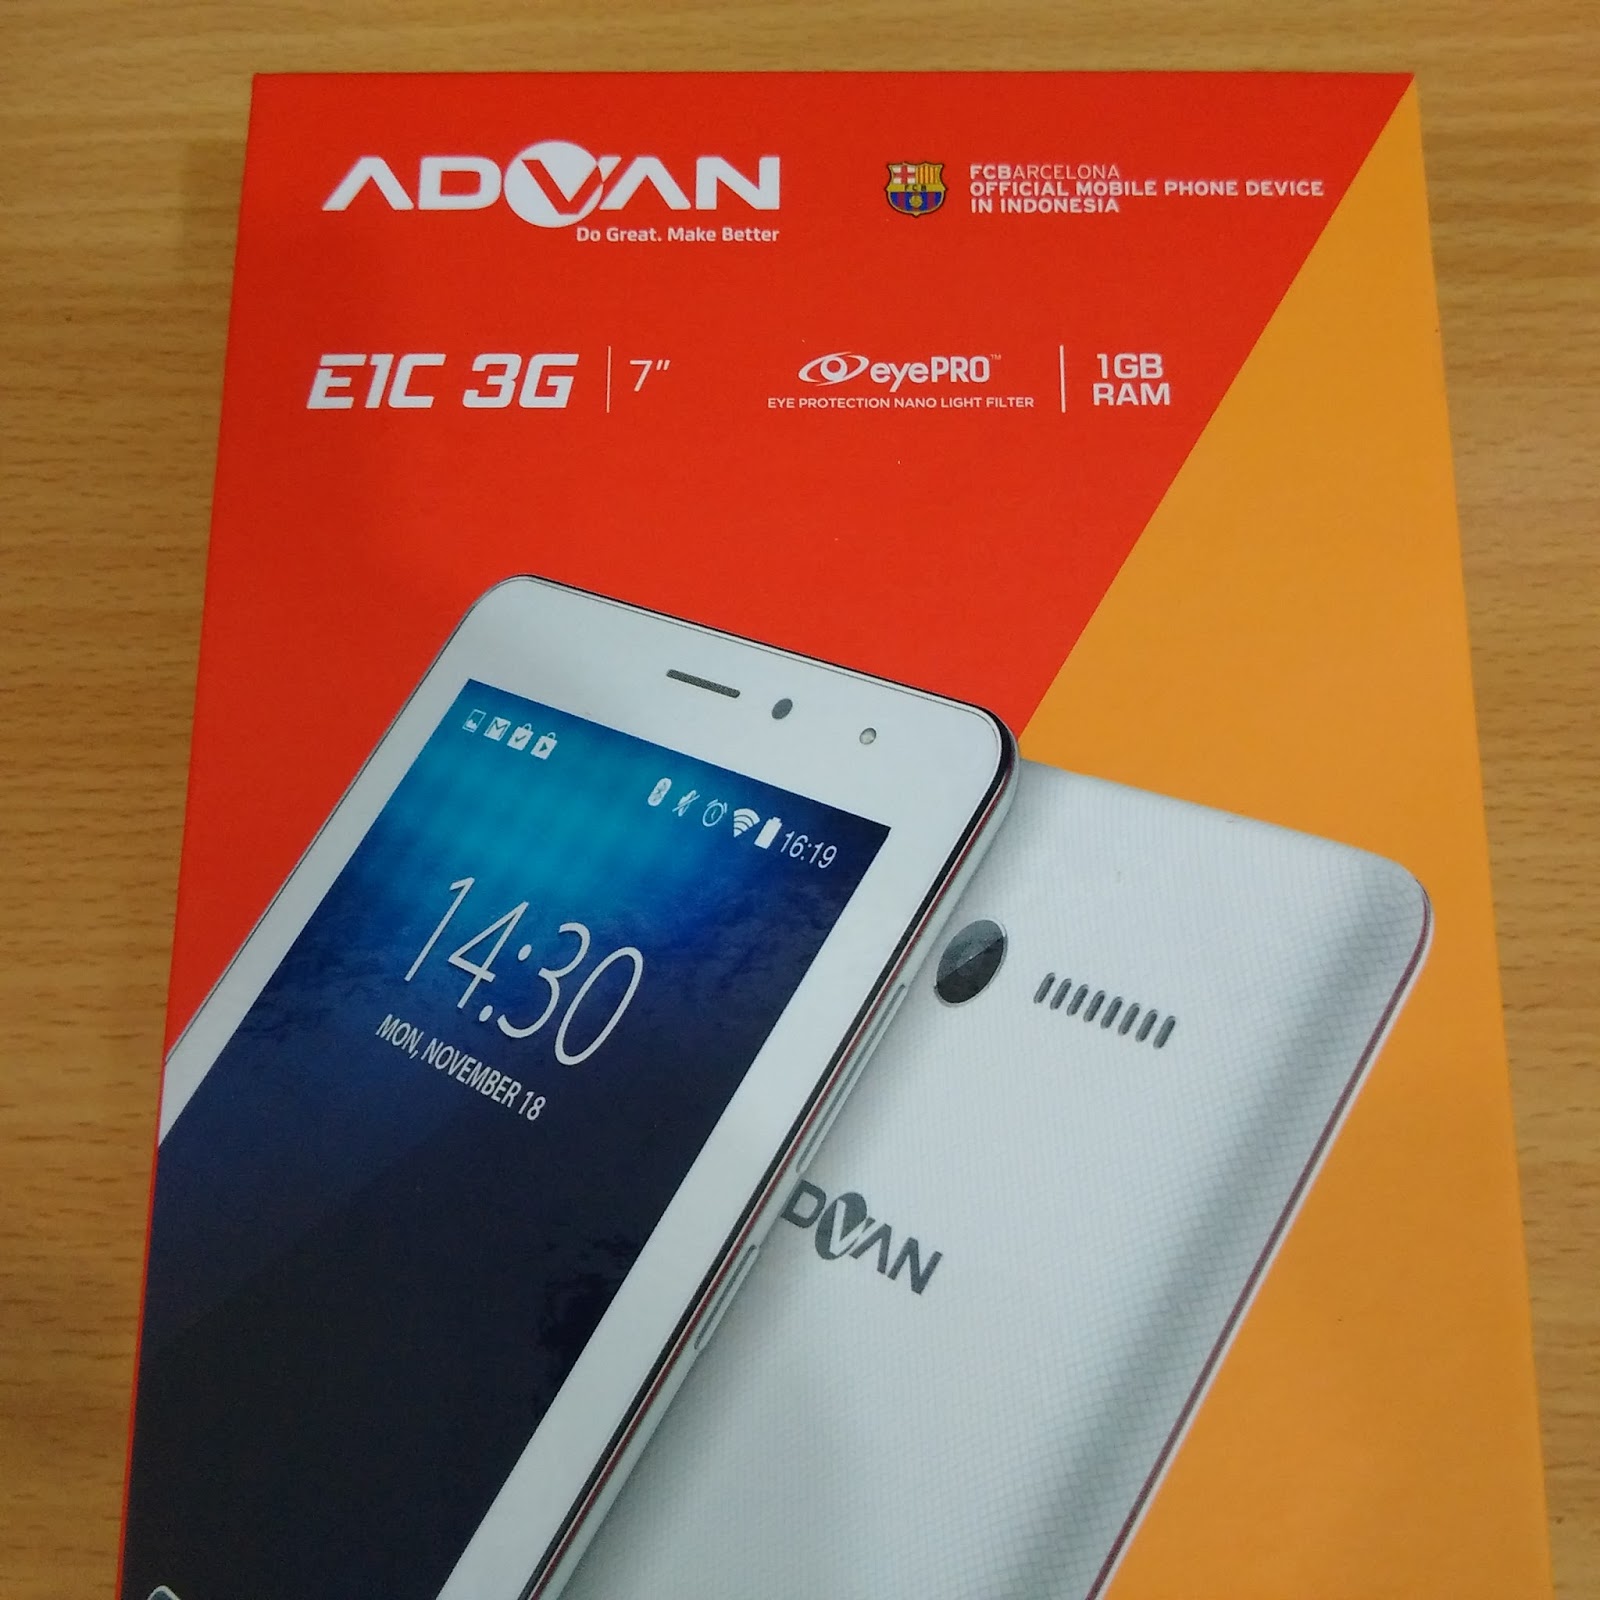 Firmware Advan E1C 3G NEW (RAM 1GB) Via Sp_Flashtool ...